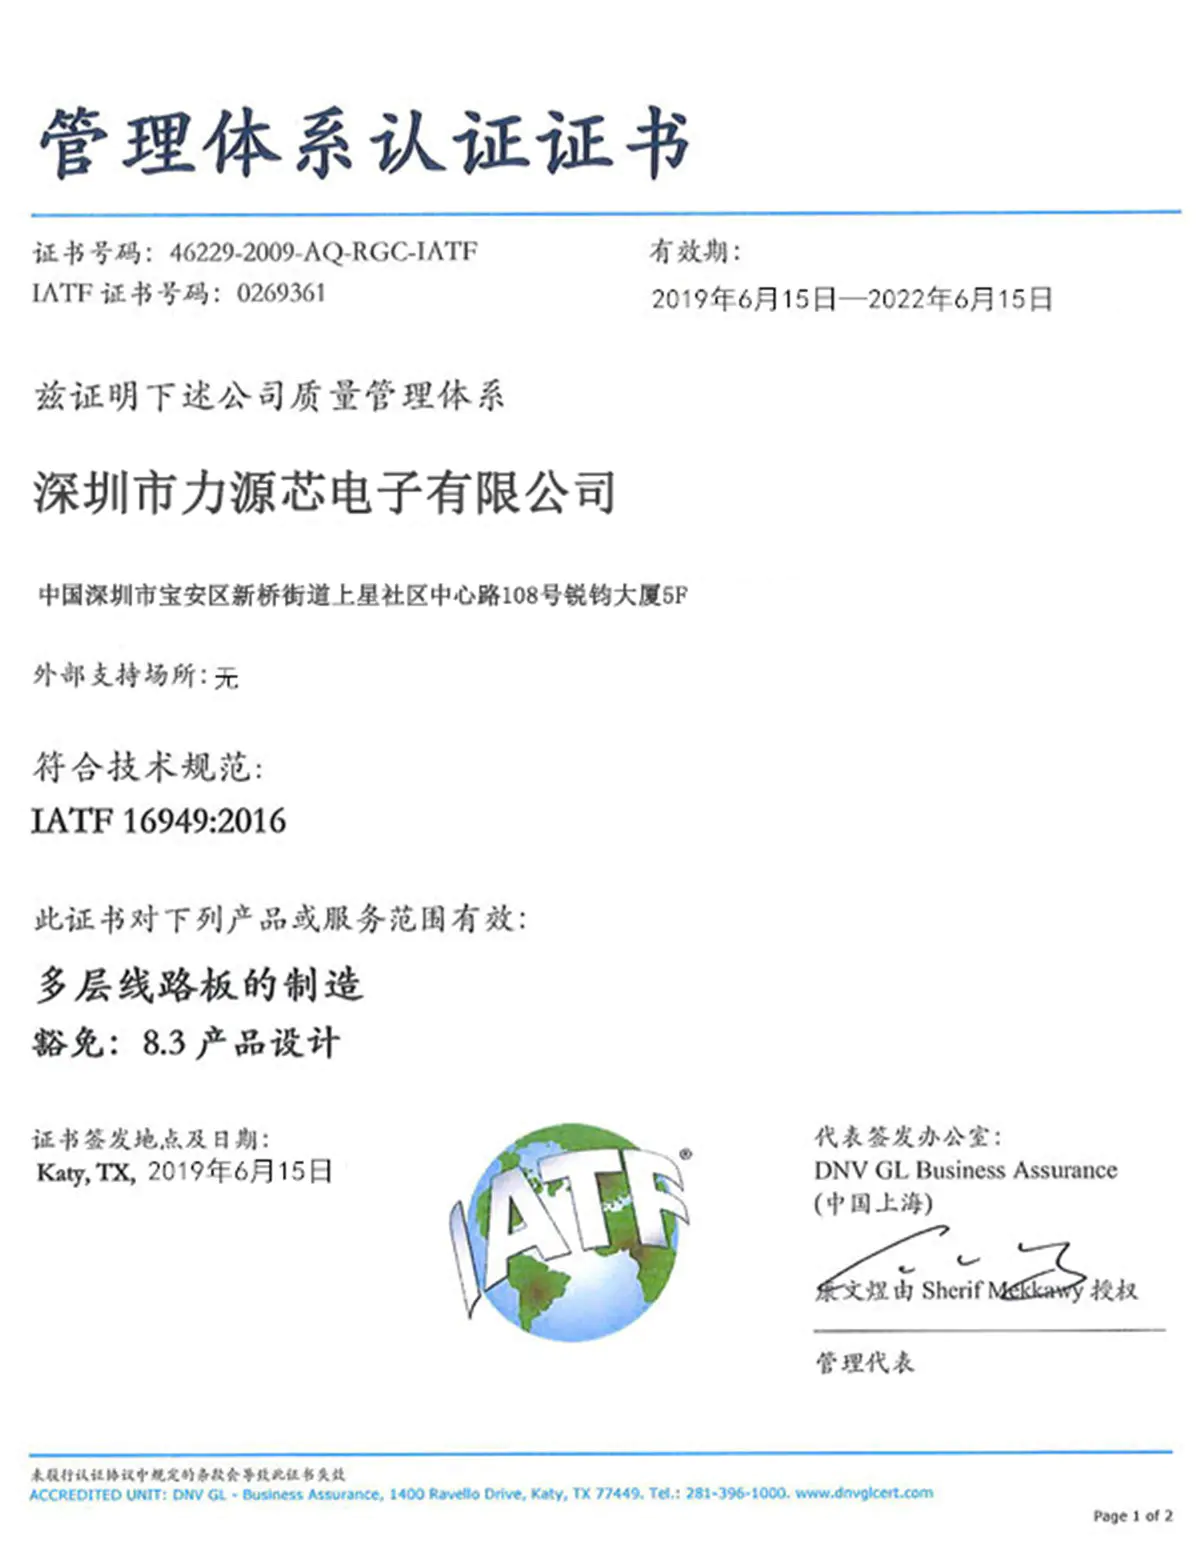 IATF (국제표준기술위원회)